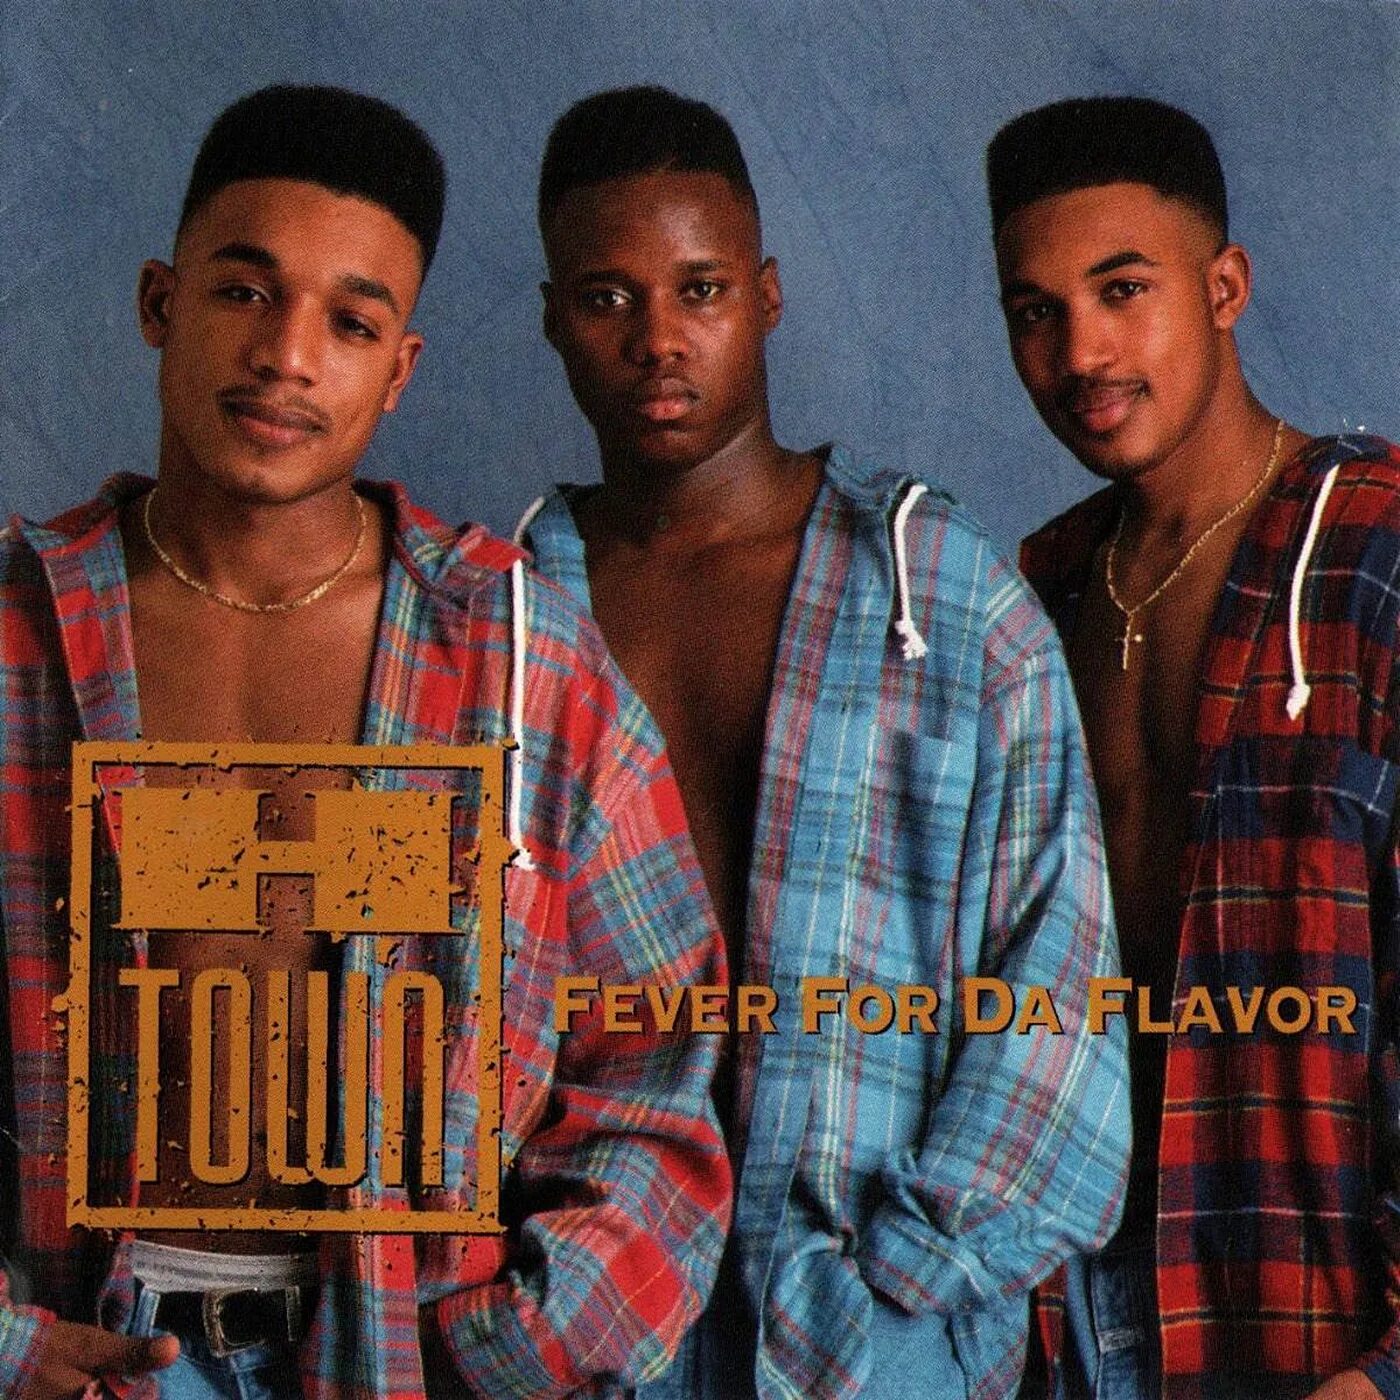 Джоджо Boyz II men. Фивер Таун. Fever for the Flava группа.